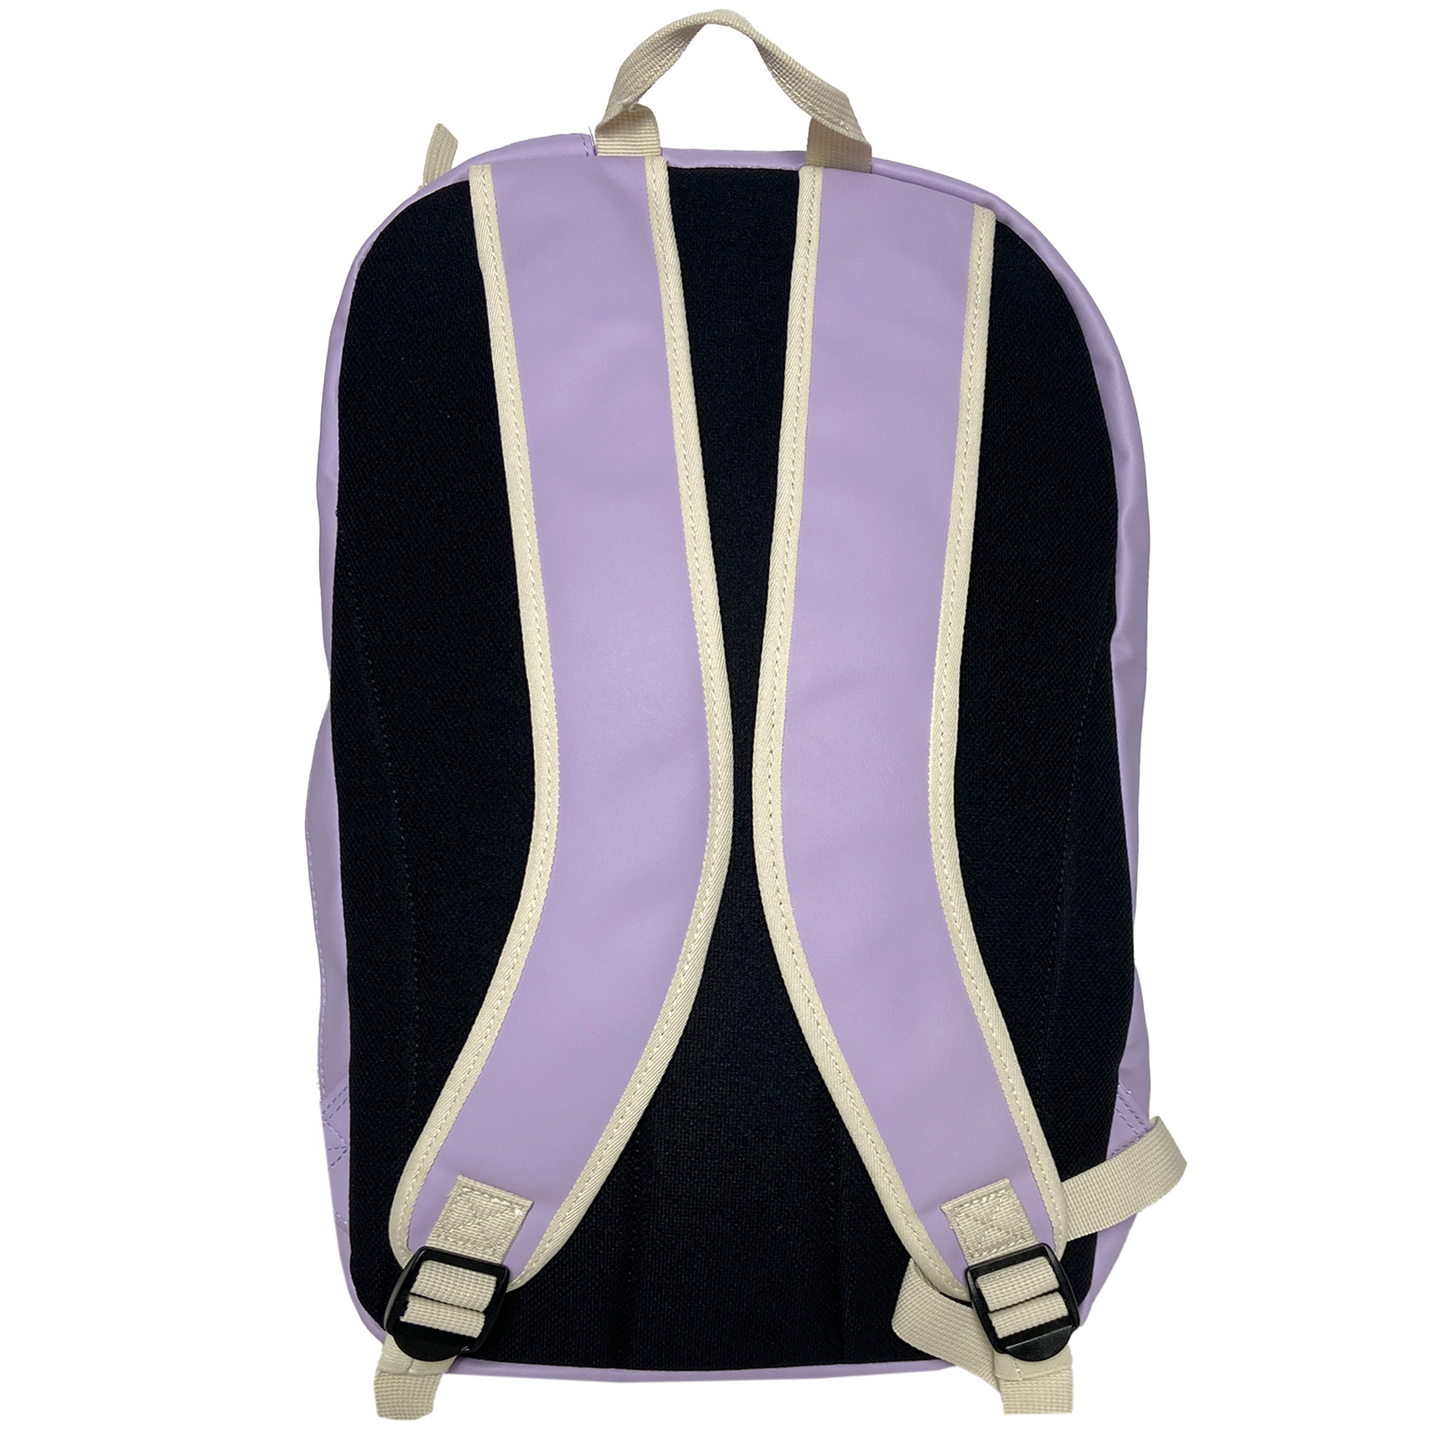 Yonex Active Backpack (BAG82412) Lilac